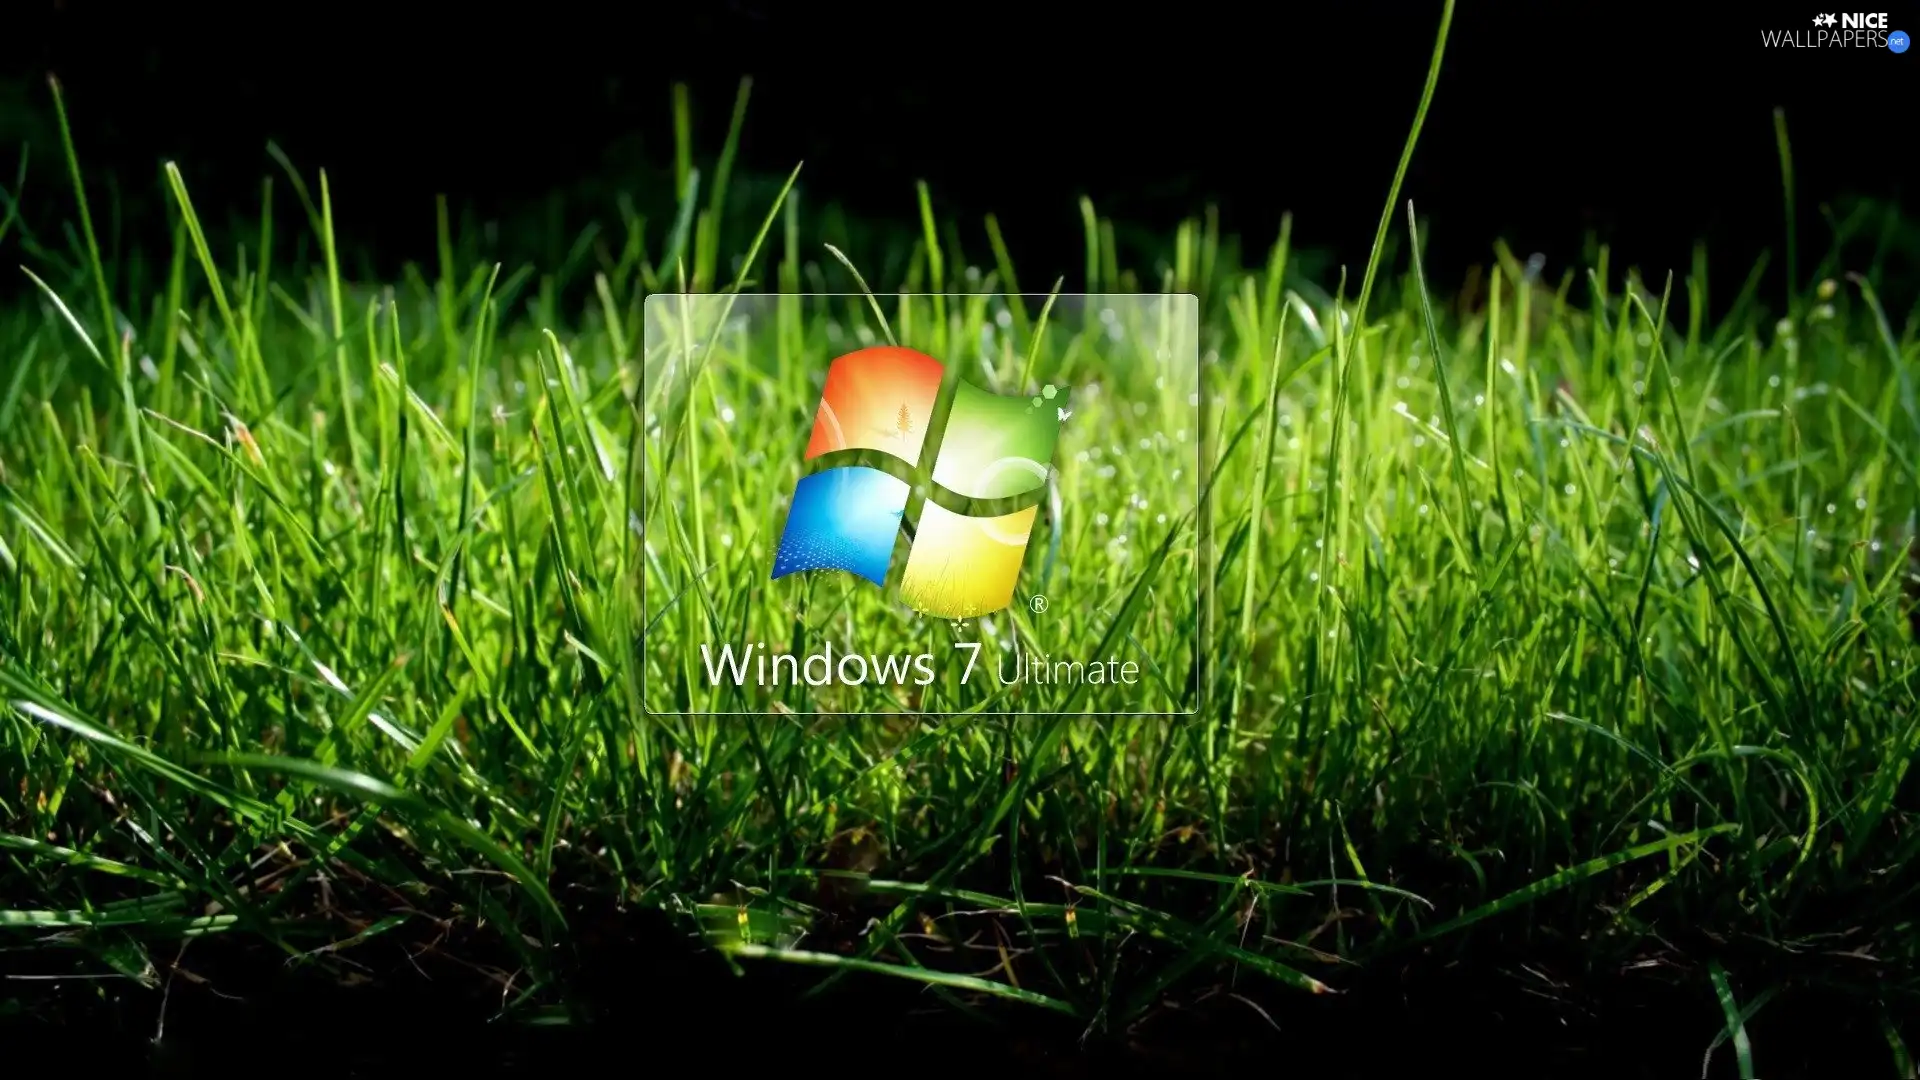 logo, Windows 7, grass